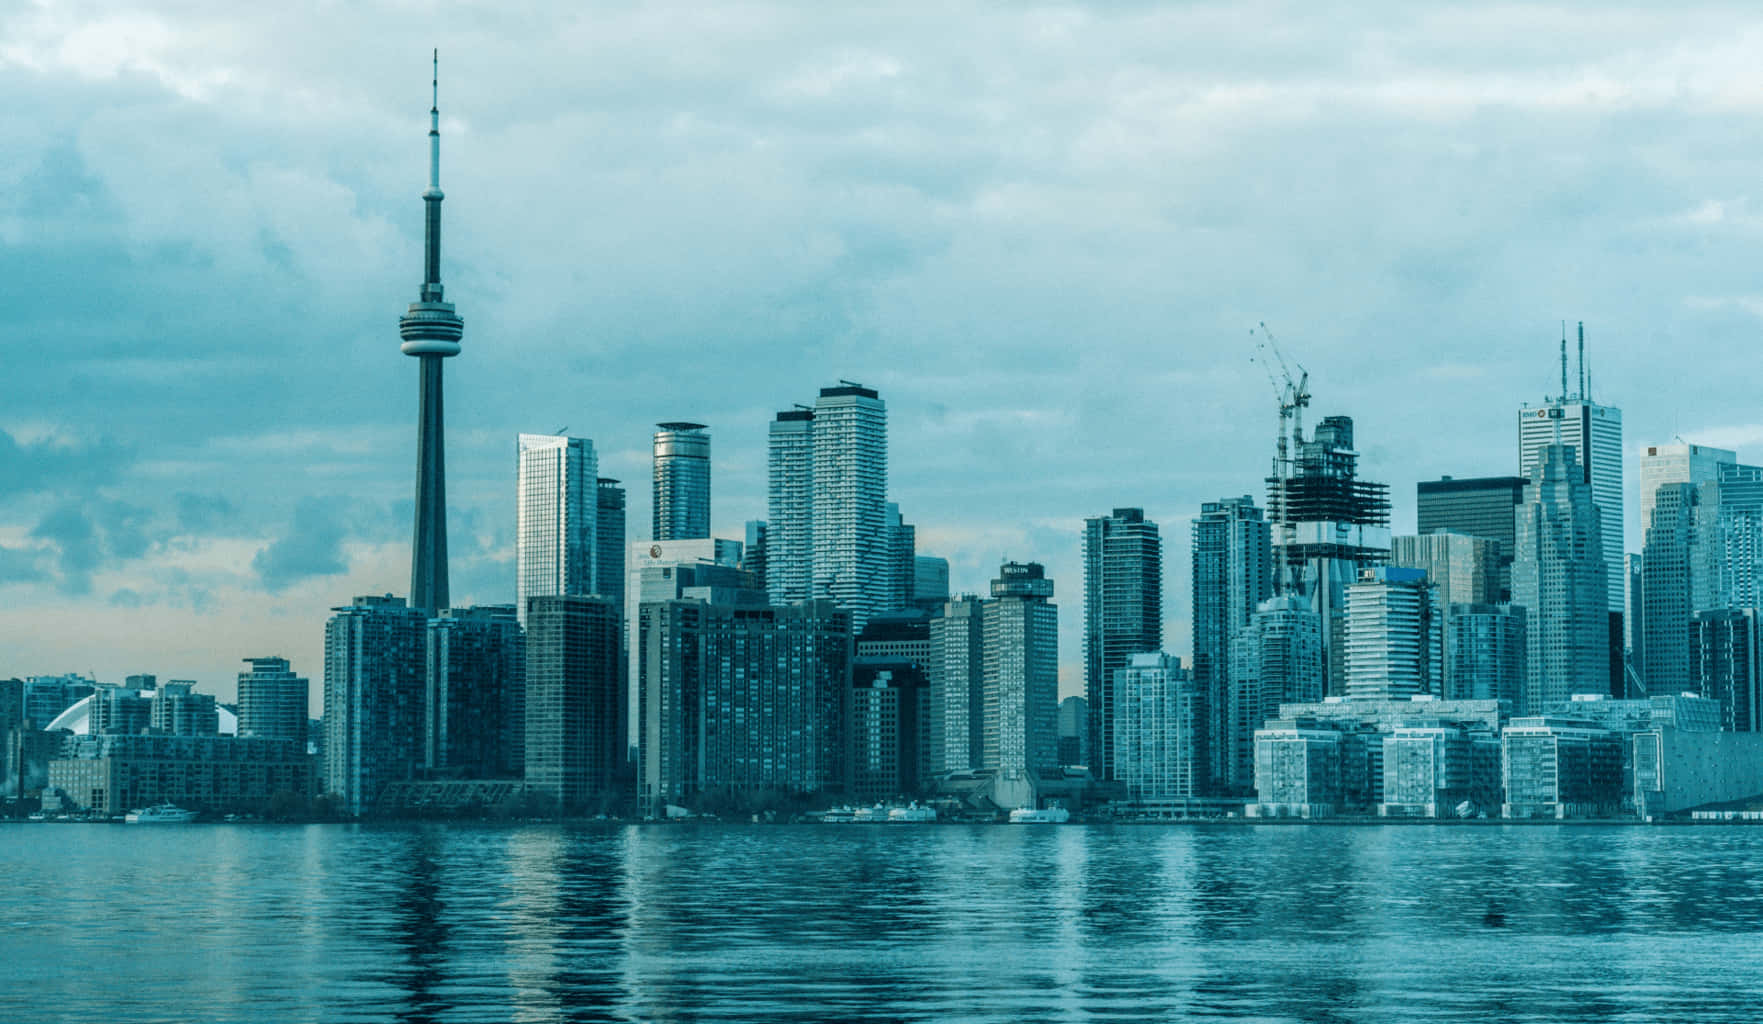 The beautiful Toronto skyline with its twinkling lights